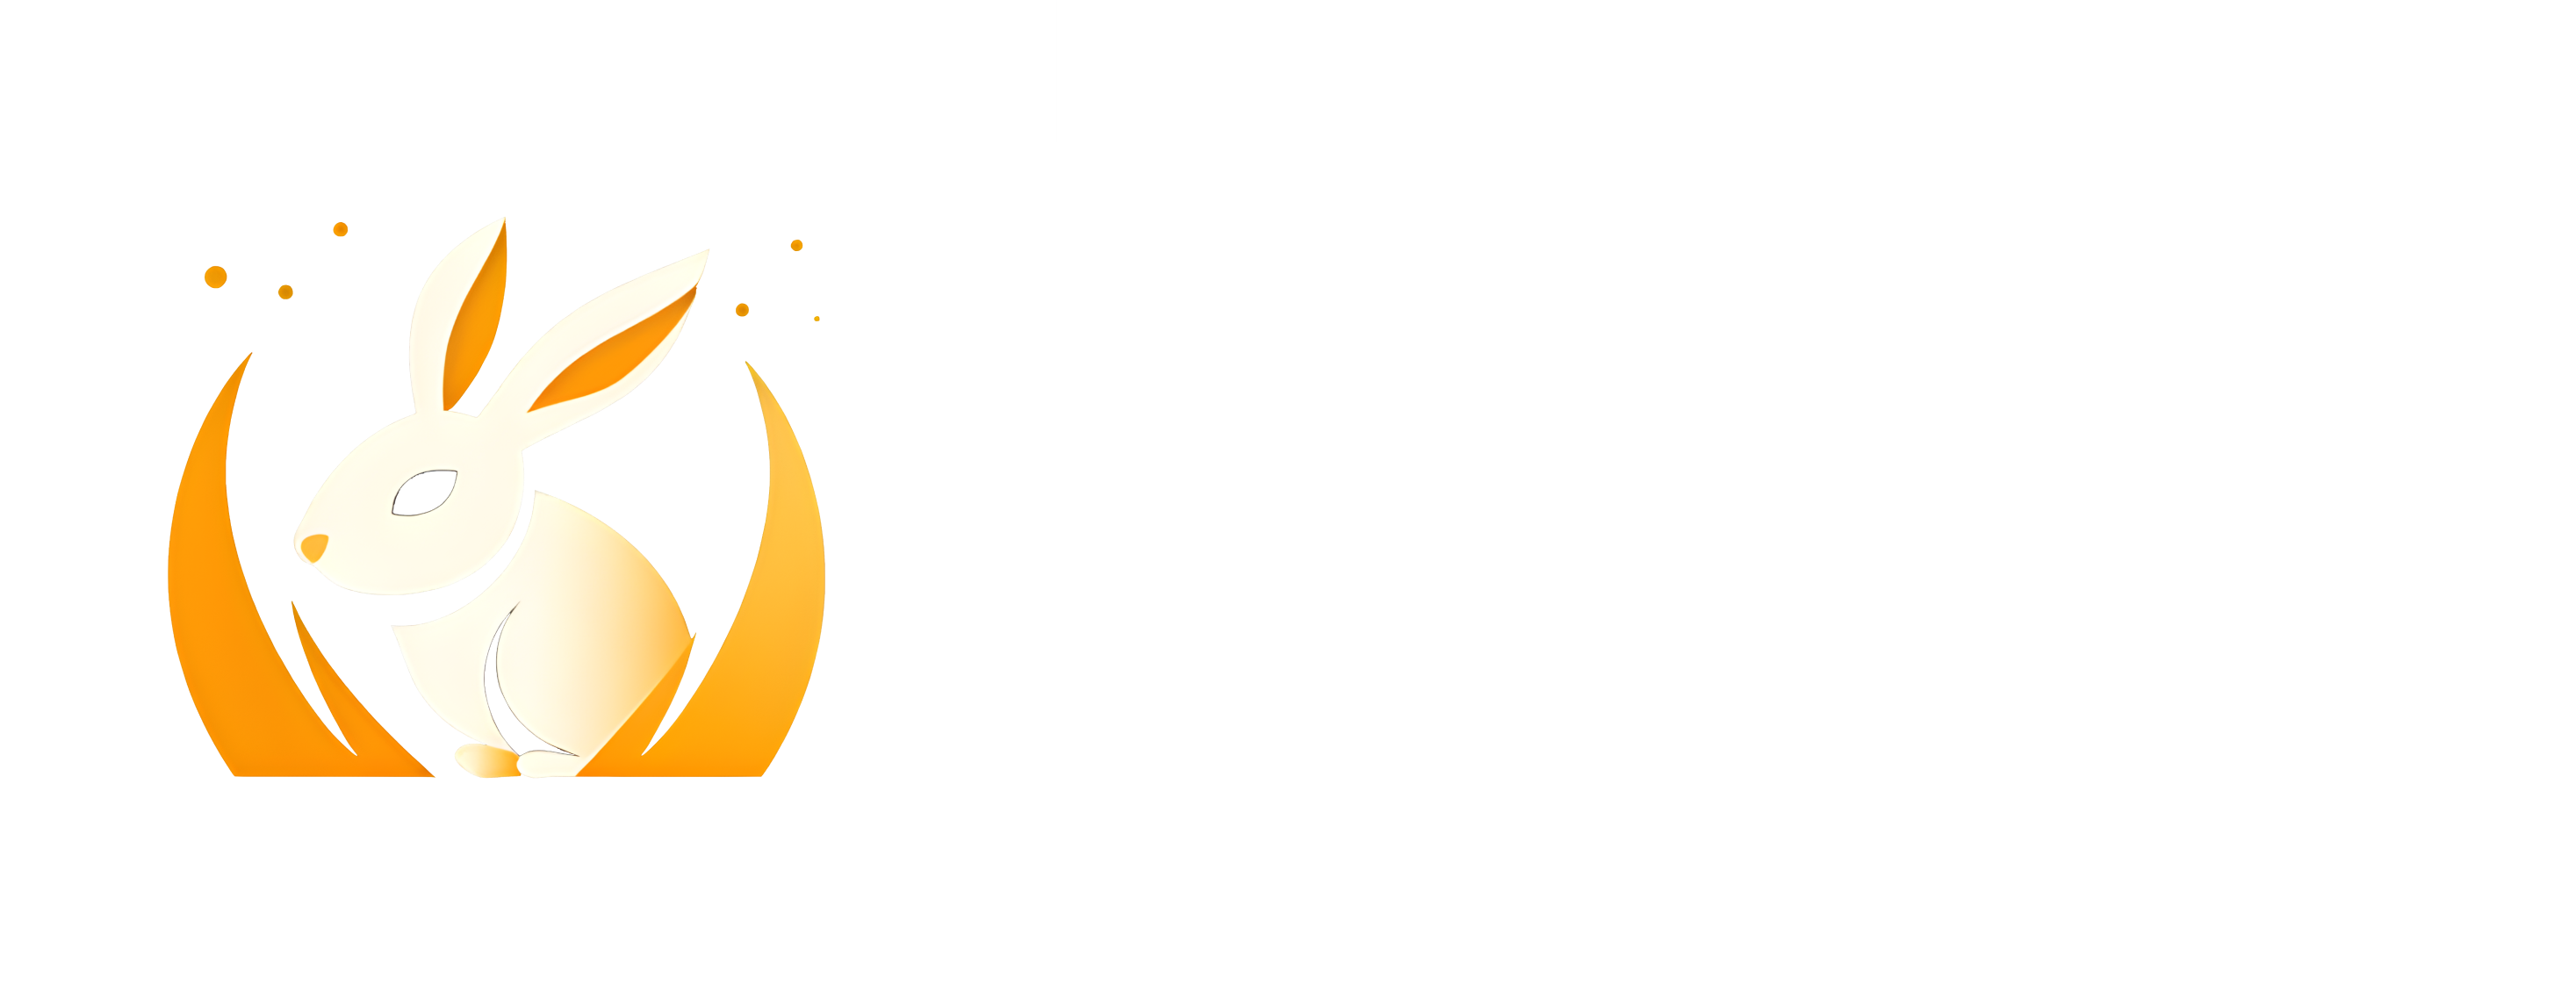 Hopfield logo